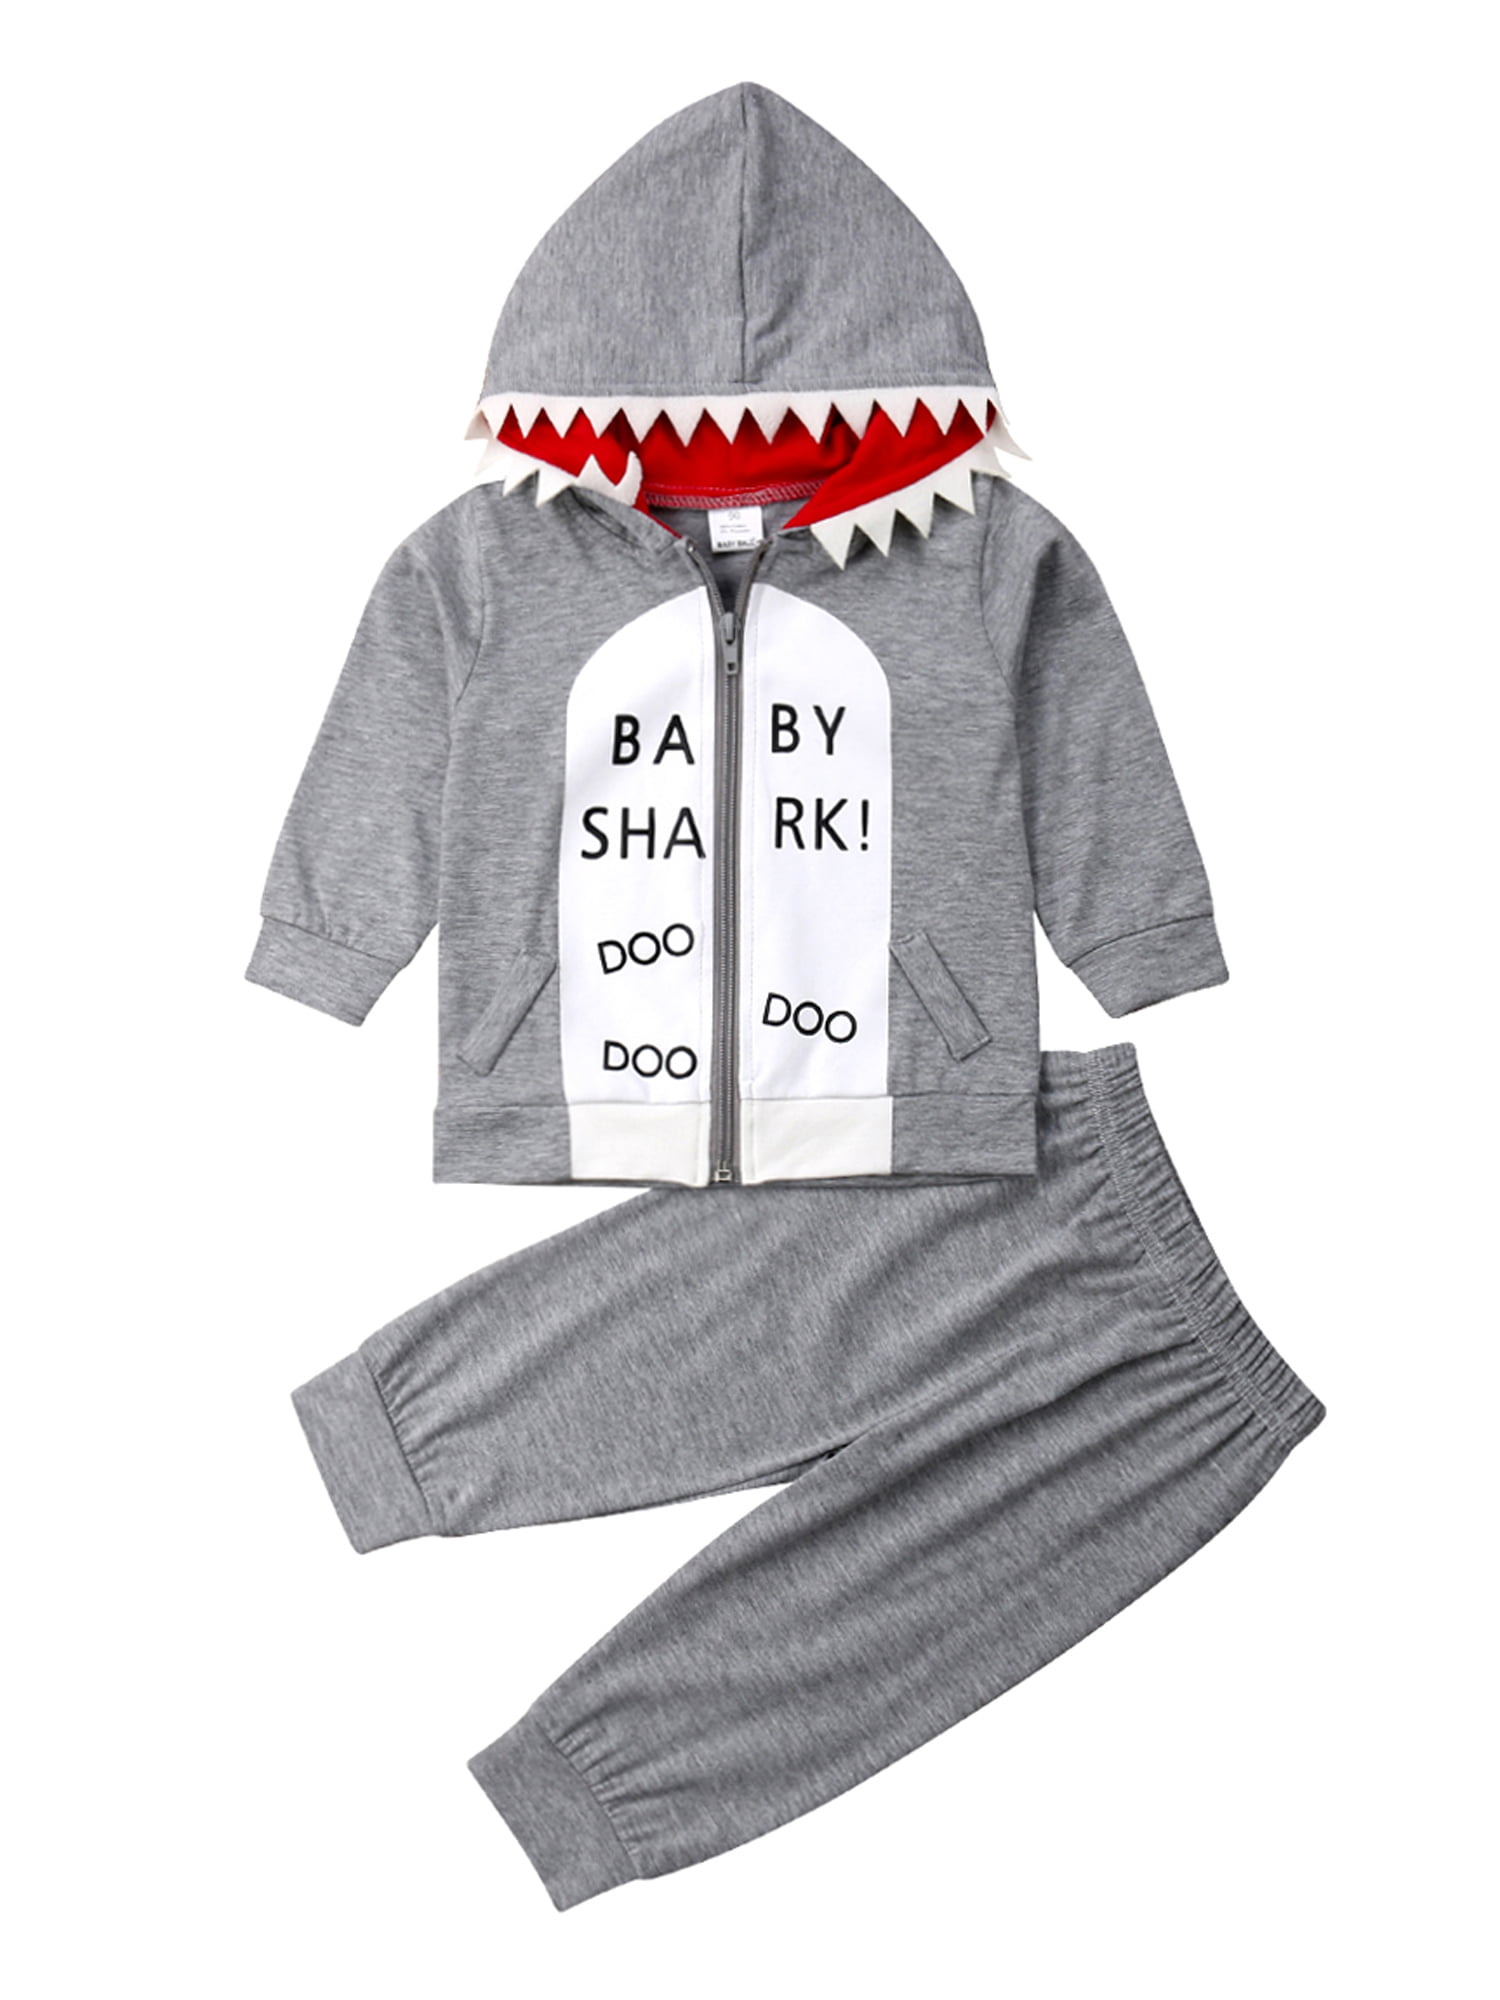 Unisex Baby Autumn Winter Shark Hooded Sweatshirt Infant Boys Girls Hoodies with Kangaroo Muff Pockets& Shark Fin